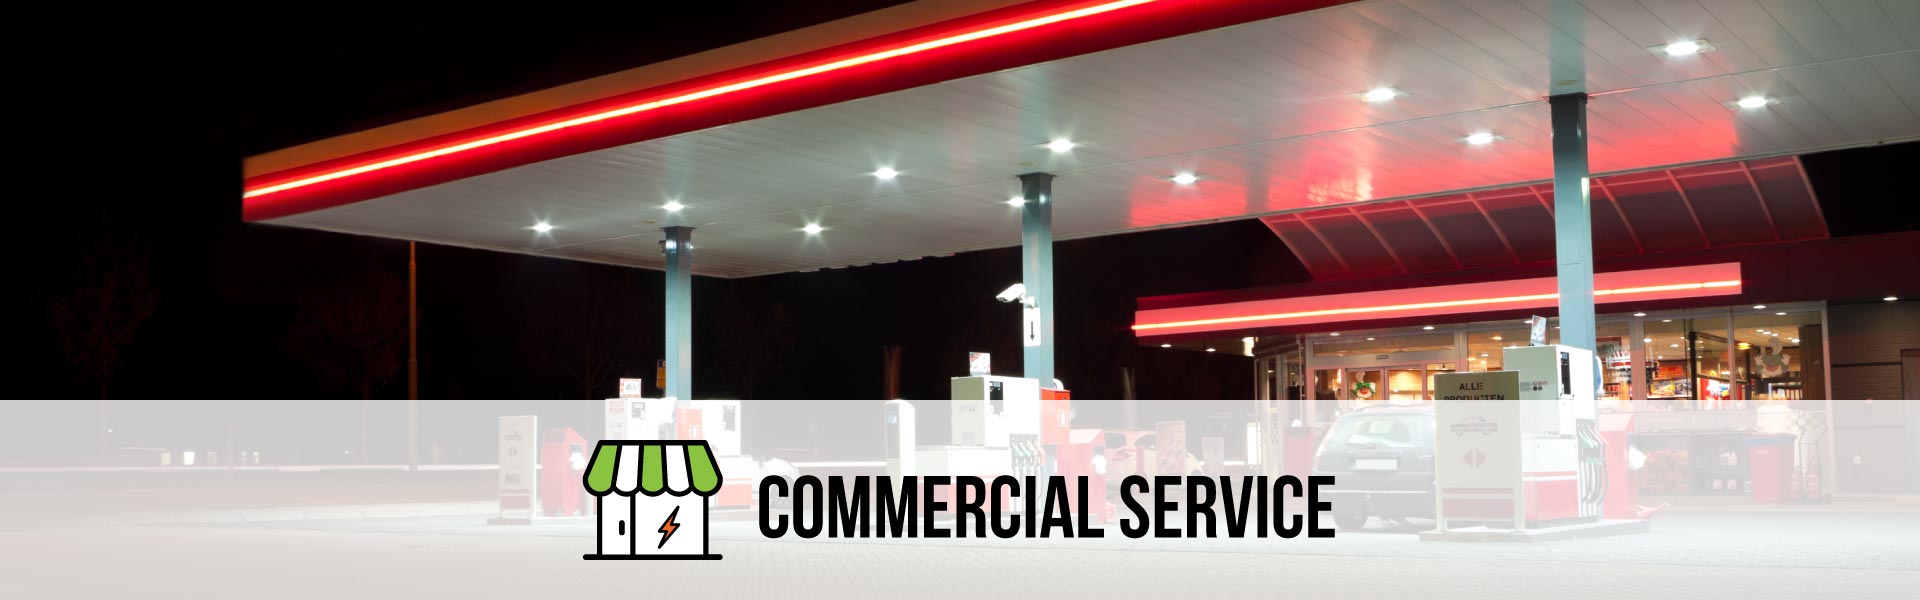 commercial service header